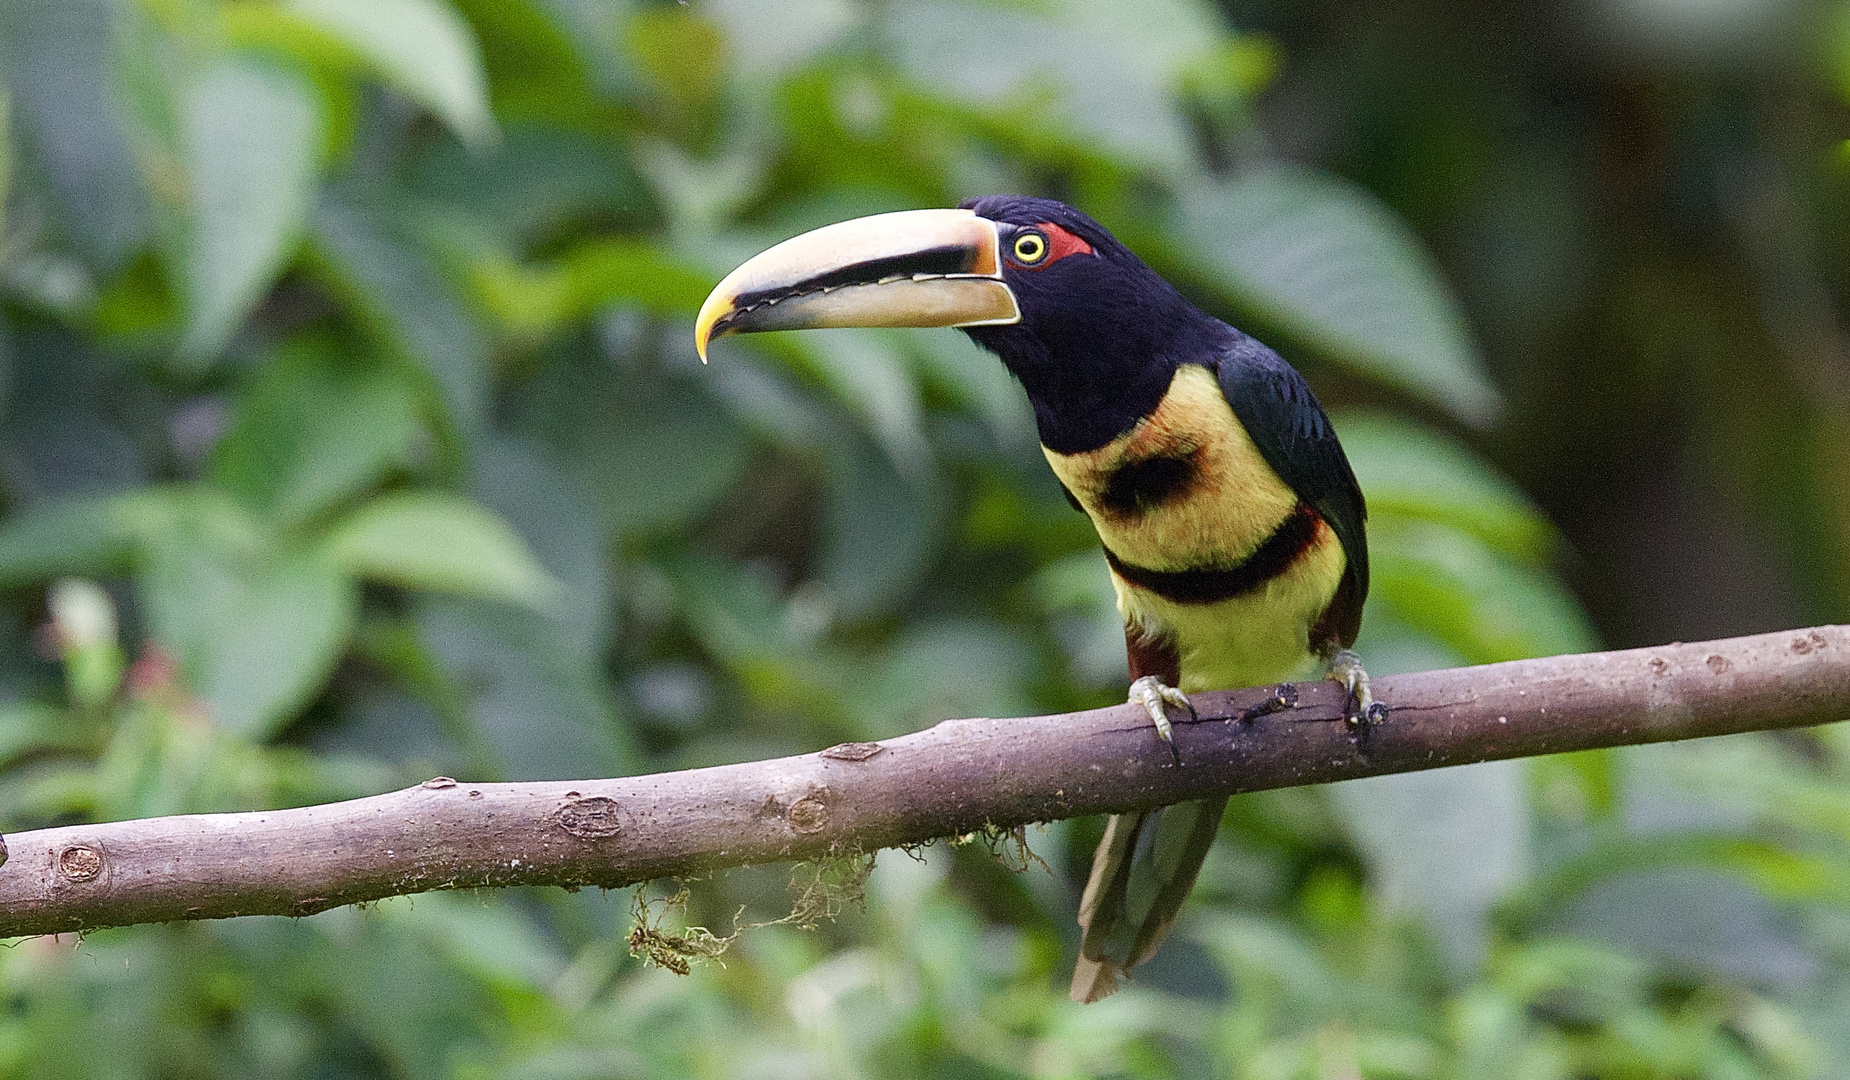 Aracari aus dem Berregenwald von Ecuador